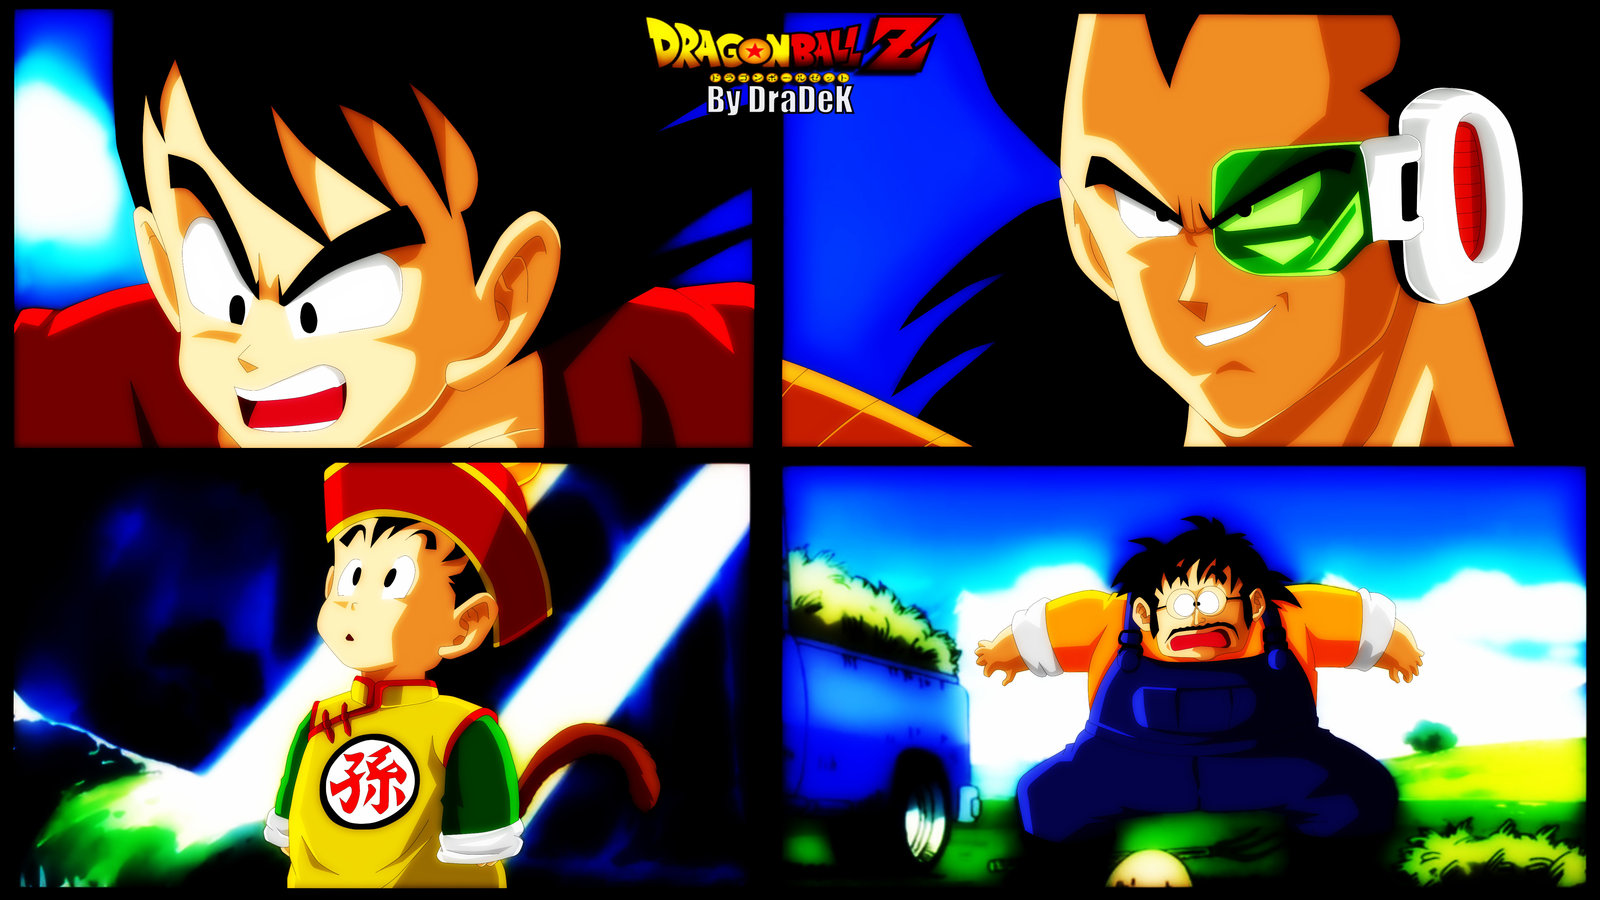 Descarga gratis la imagen Dragon Ball Z, Animado, Goku, Dragon Ball, Gohan (Bola De Dragón), Raditz (Bola De Dragón) en el escritorio de tu PC